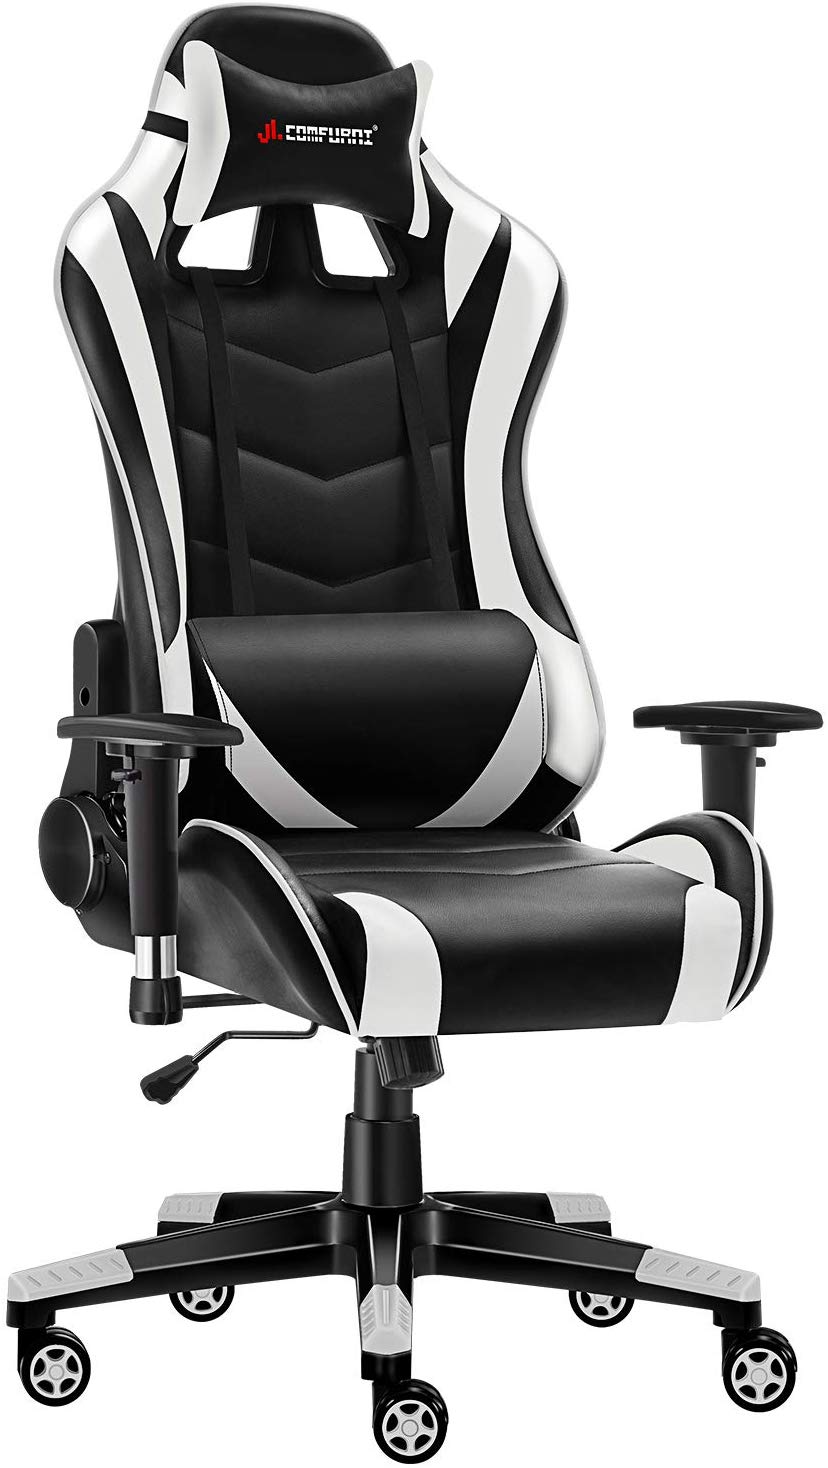 JL Comfurni Gaming Chair Ergonomic Swivel Office PC Desk Chair Computer Chairs Heavy Duty Reclining High Back with Lumbar Cushion